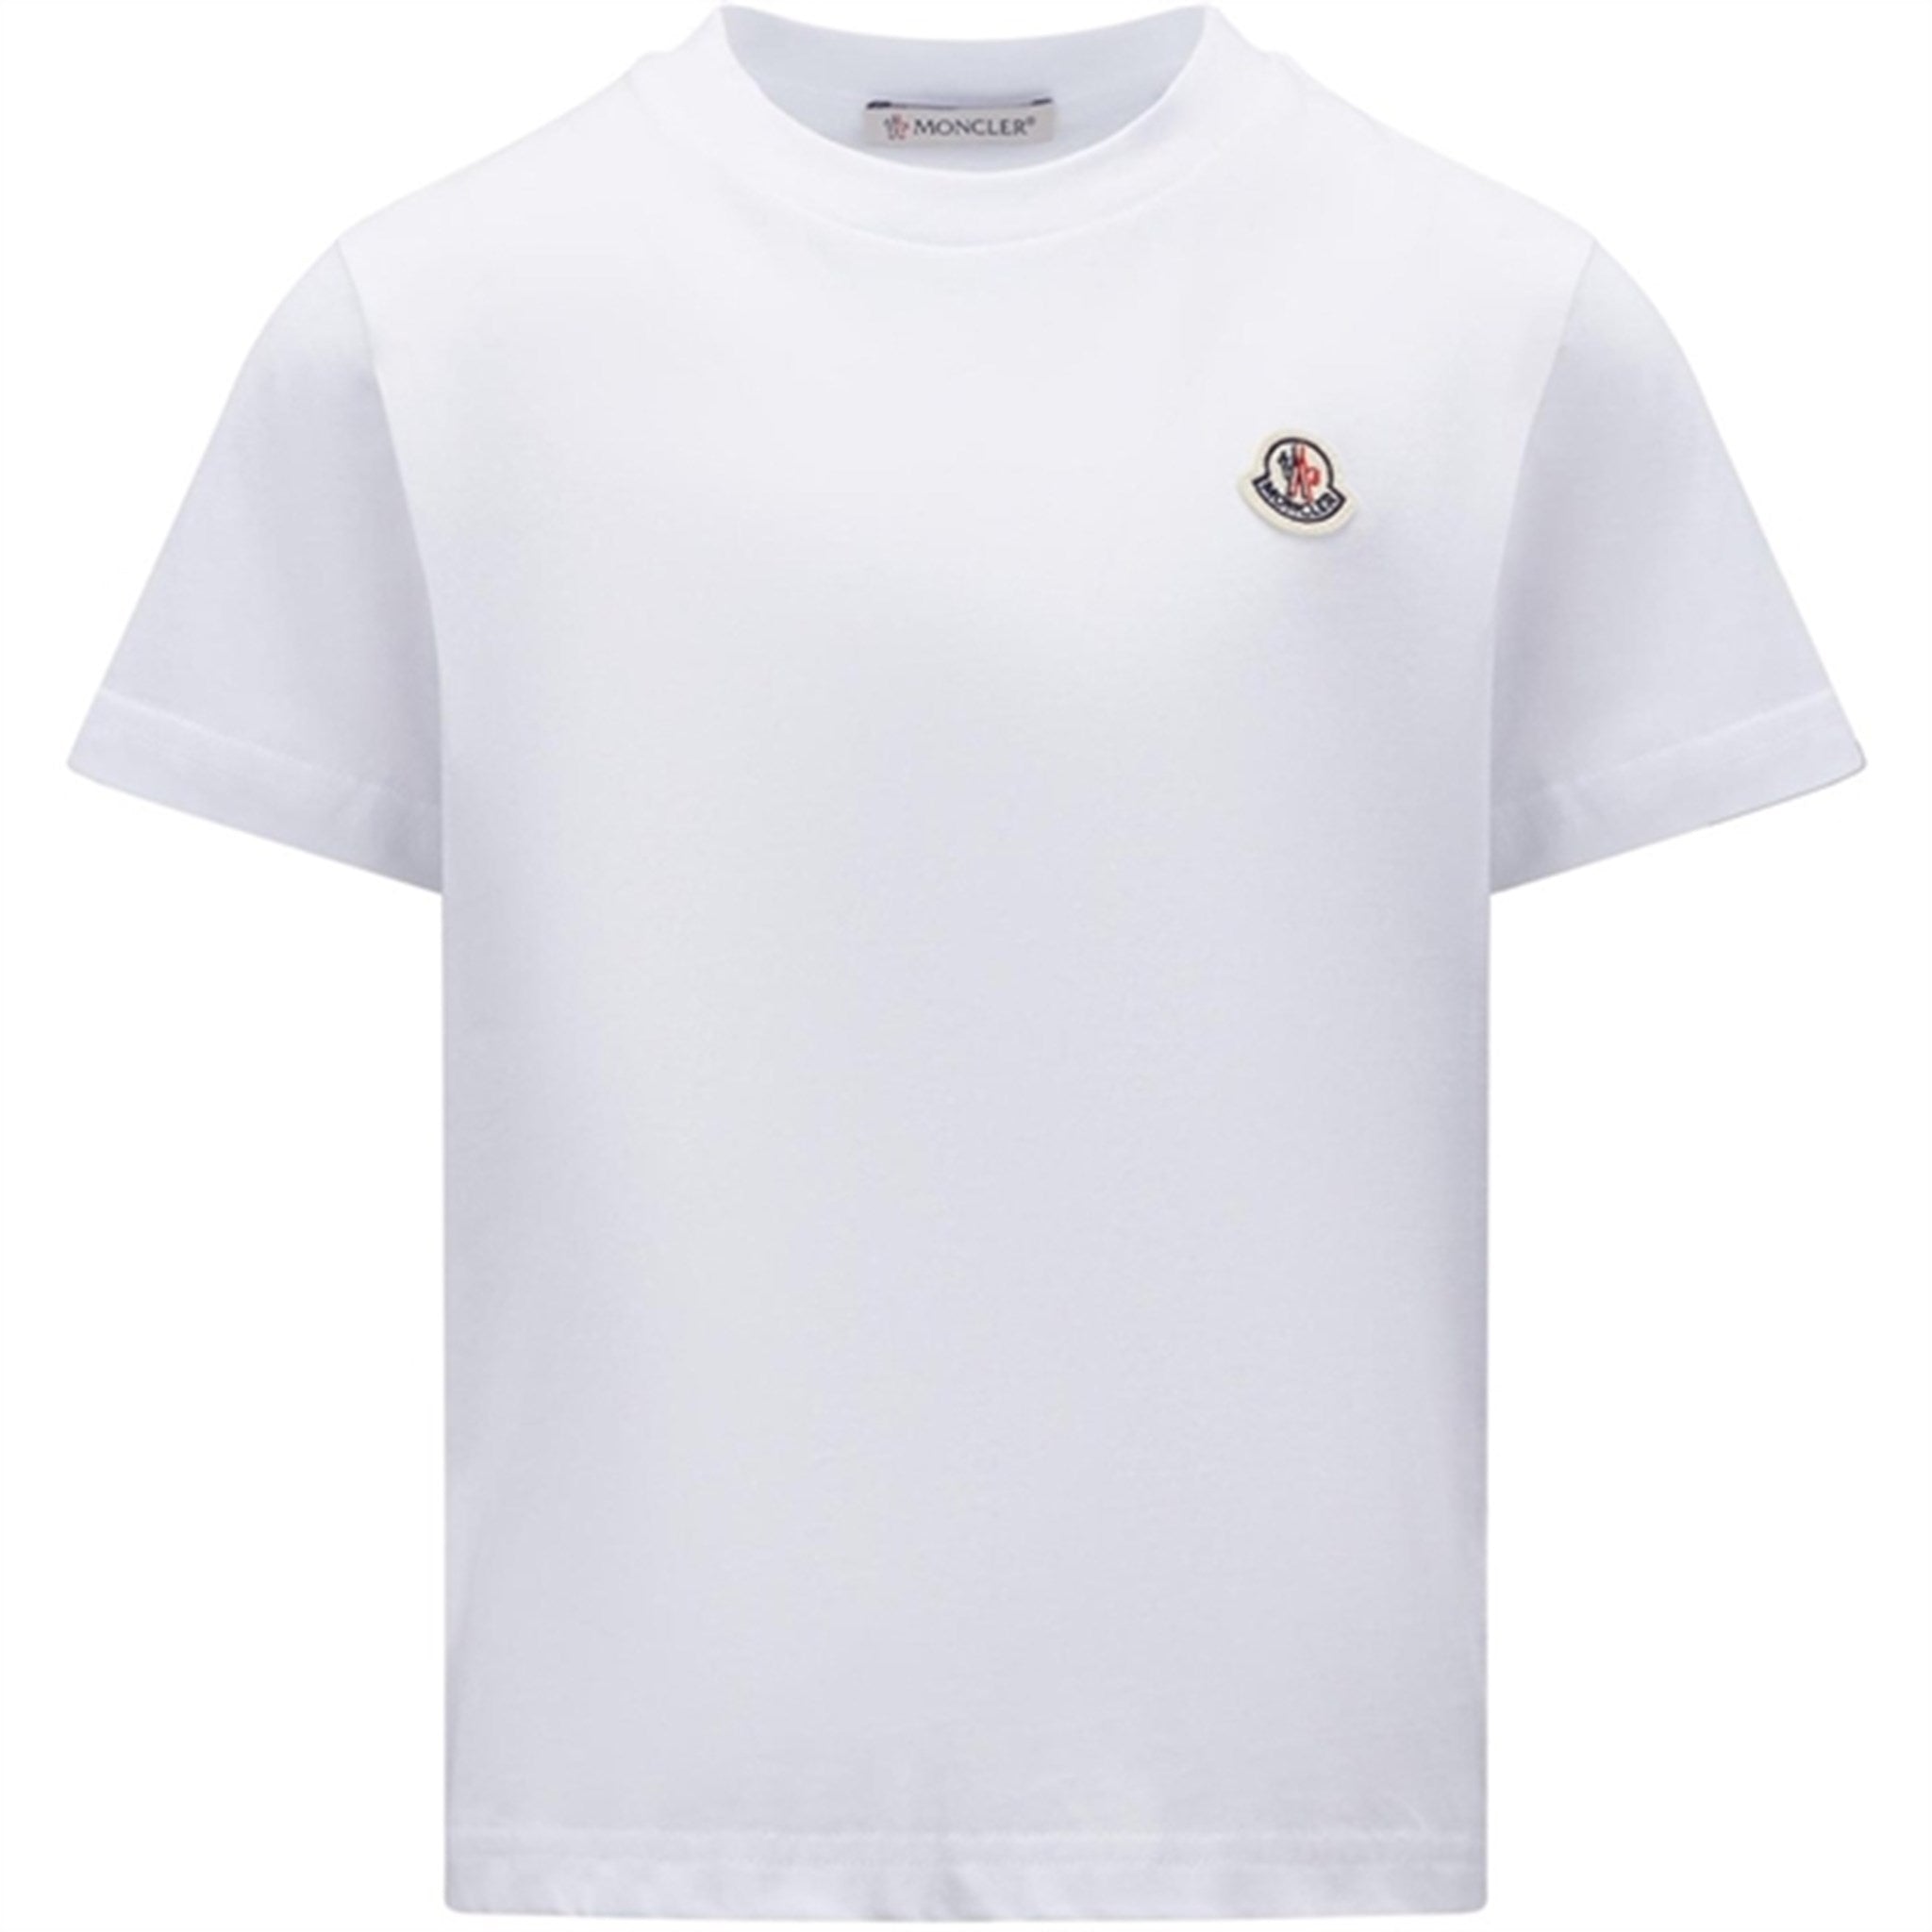 Moncler T-Shirt Optical White